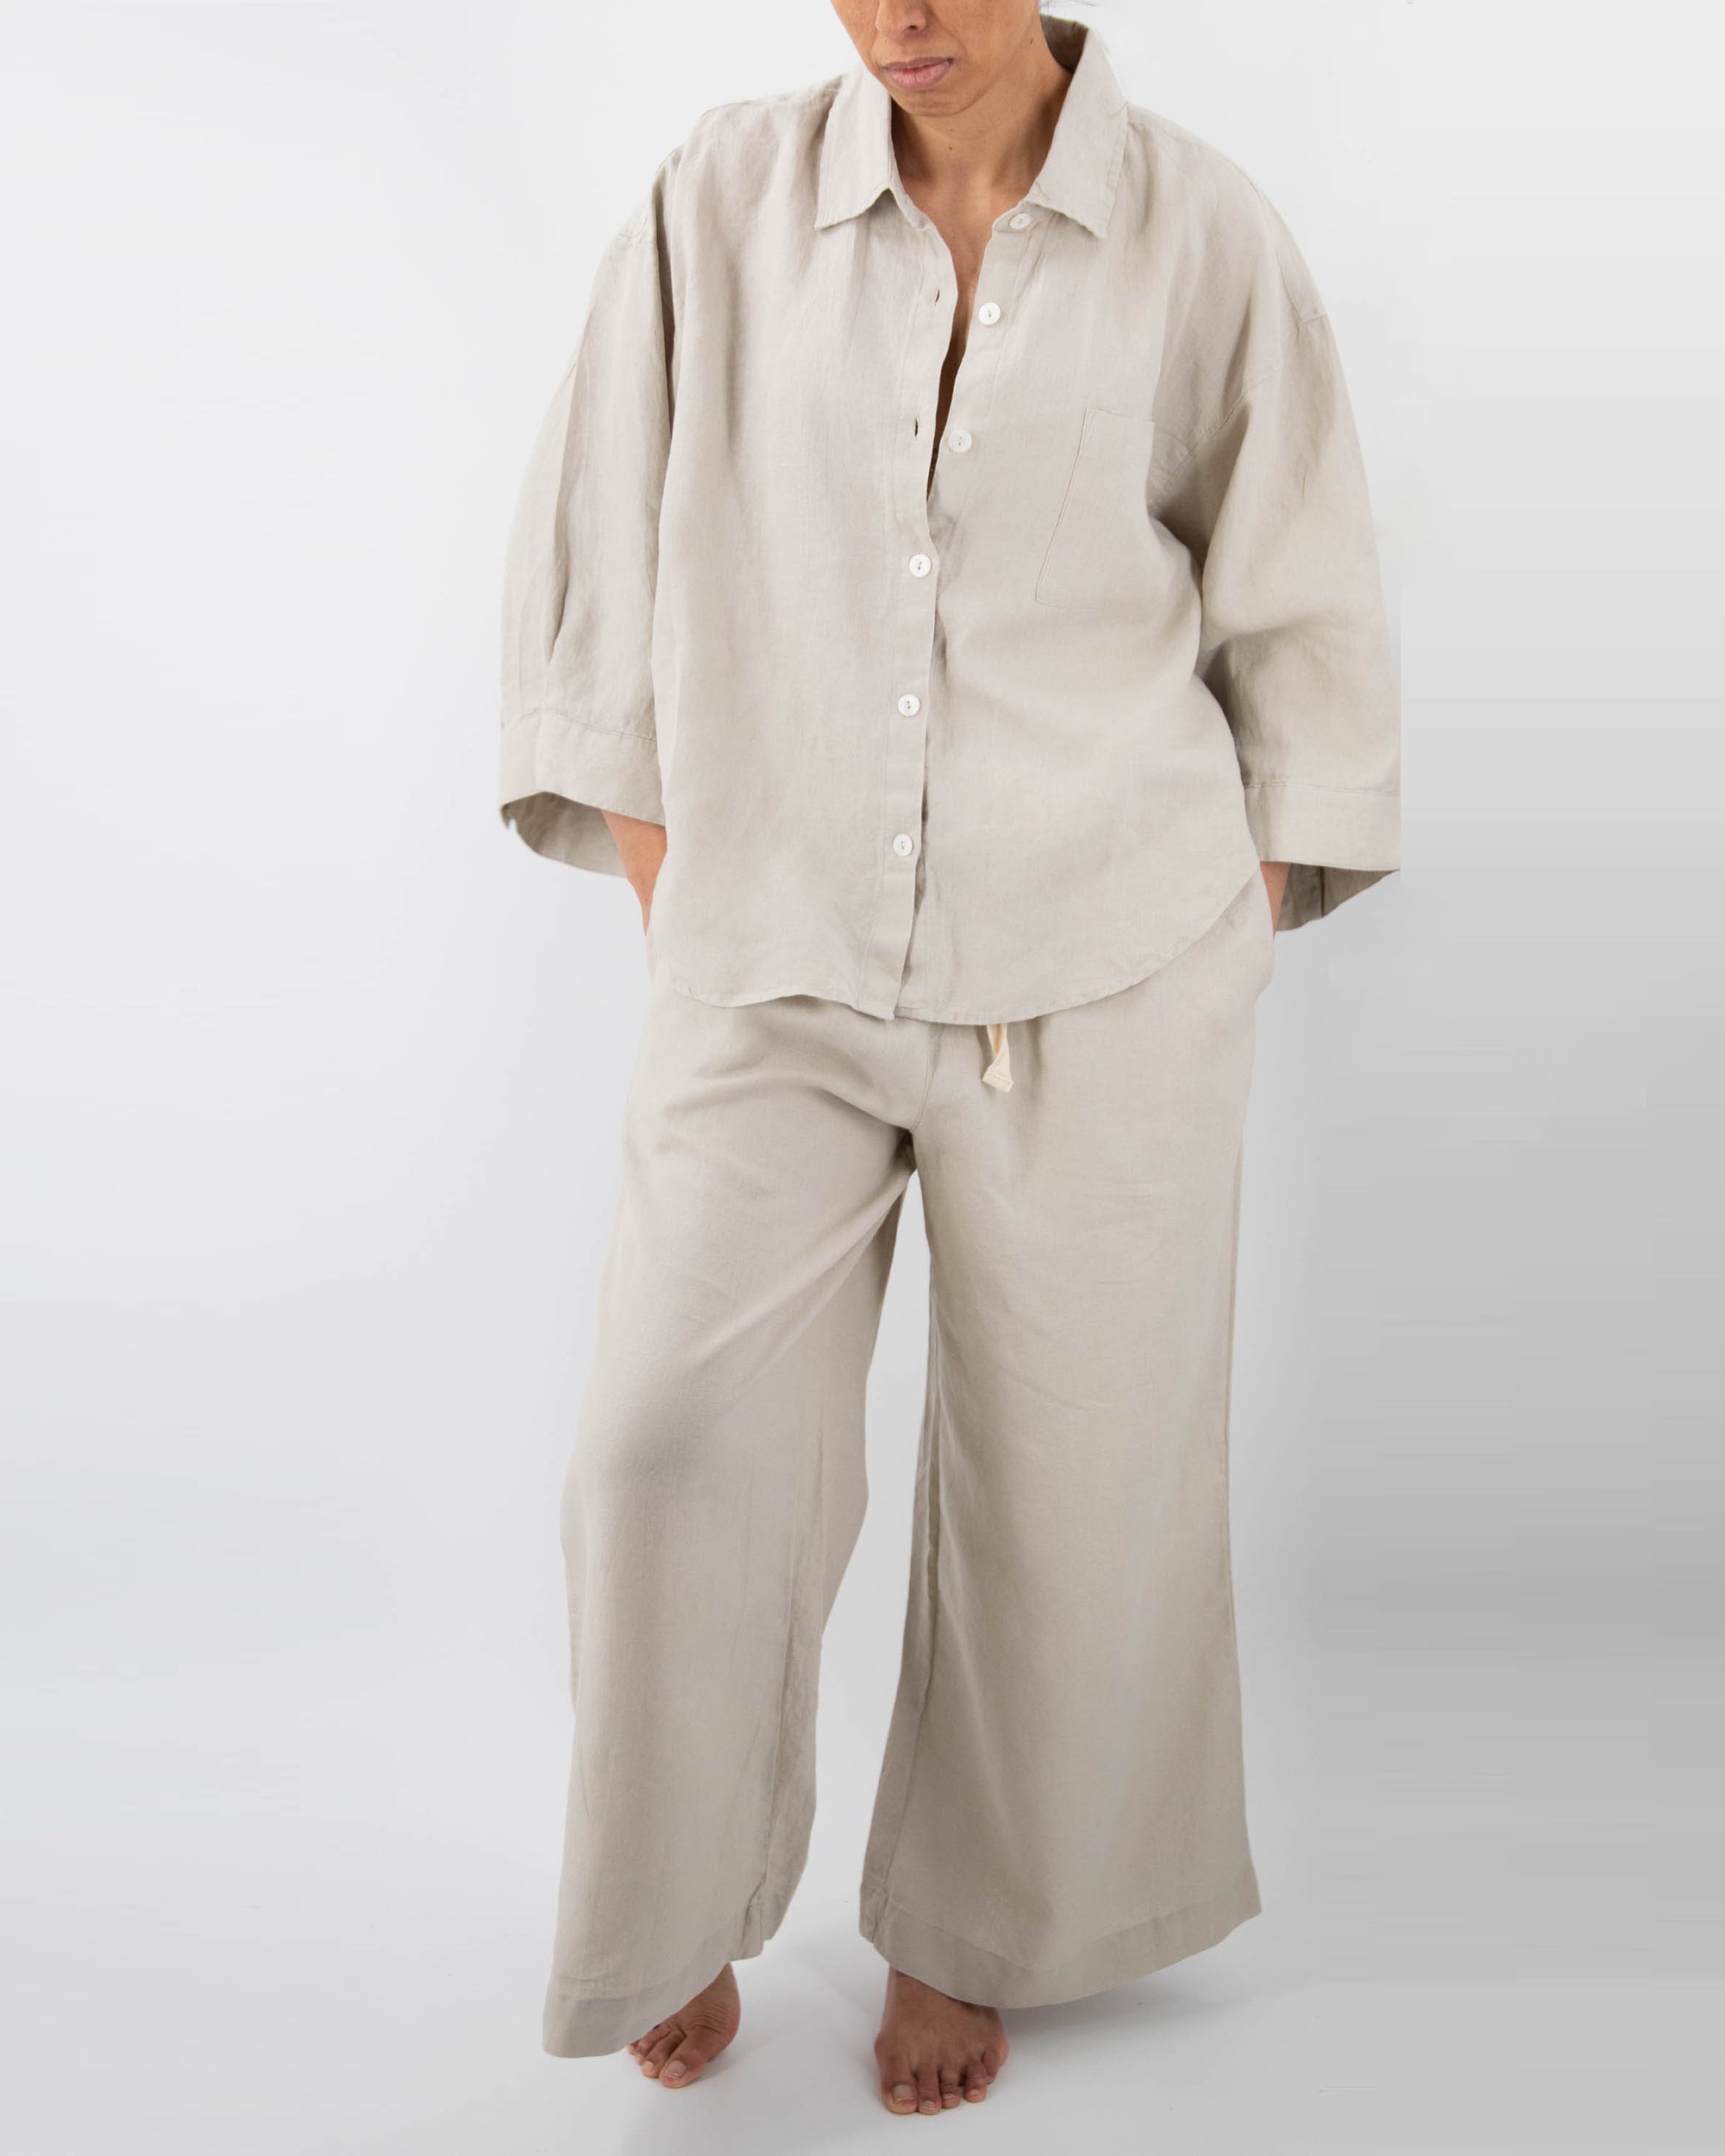 Model in dove gray linen pajamas (long sleeved shirt and long pants) 